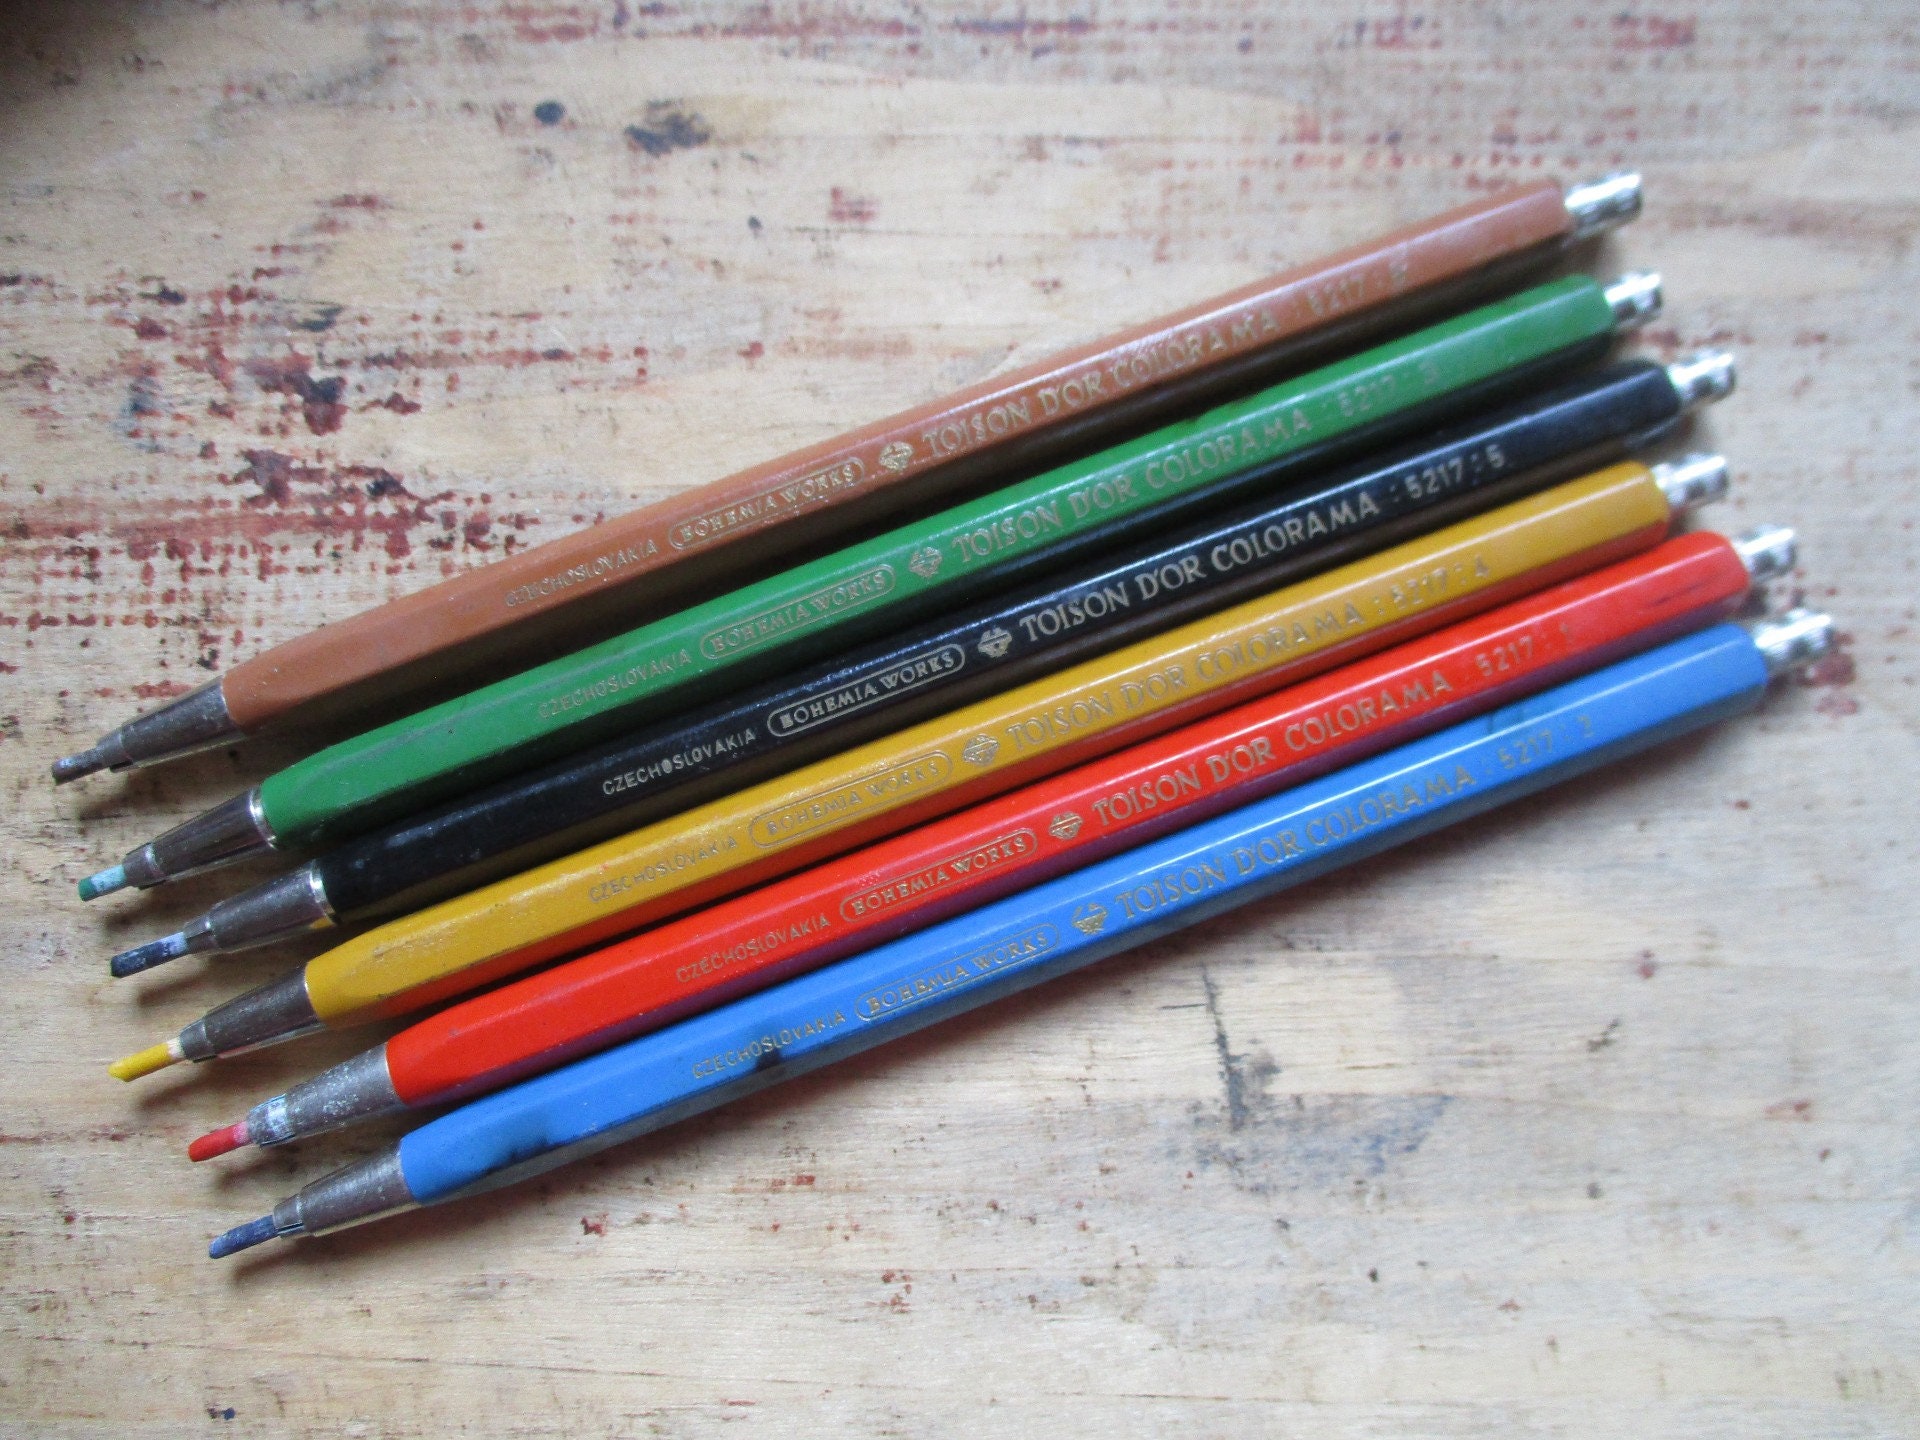 Derwent Colored Pencils Drawing Pencils Set of 6 Metal Case JAPAN IMPORT